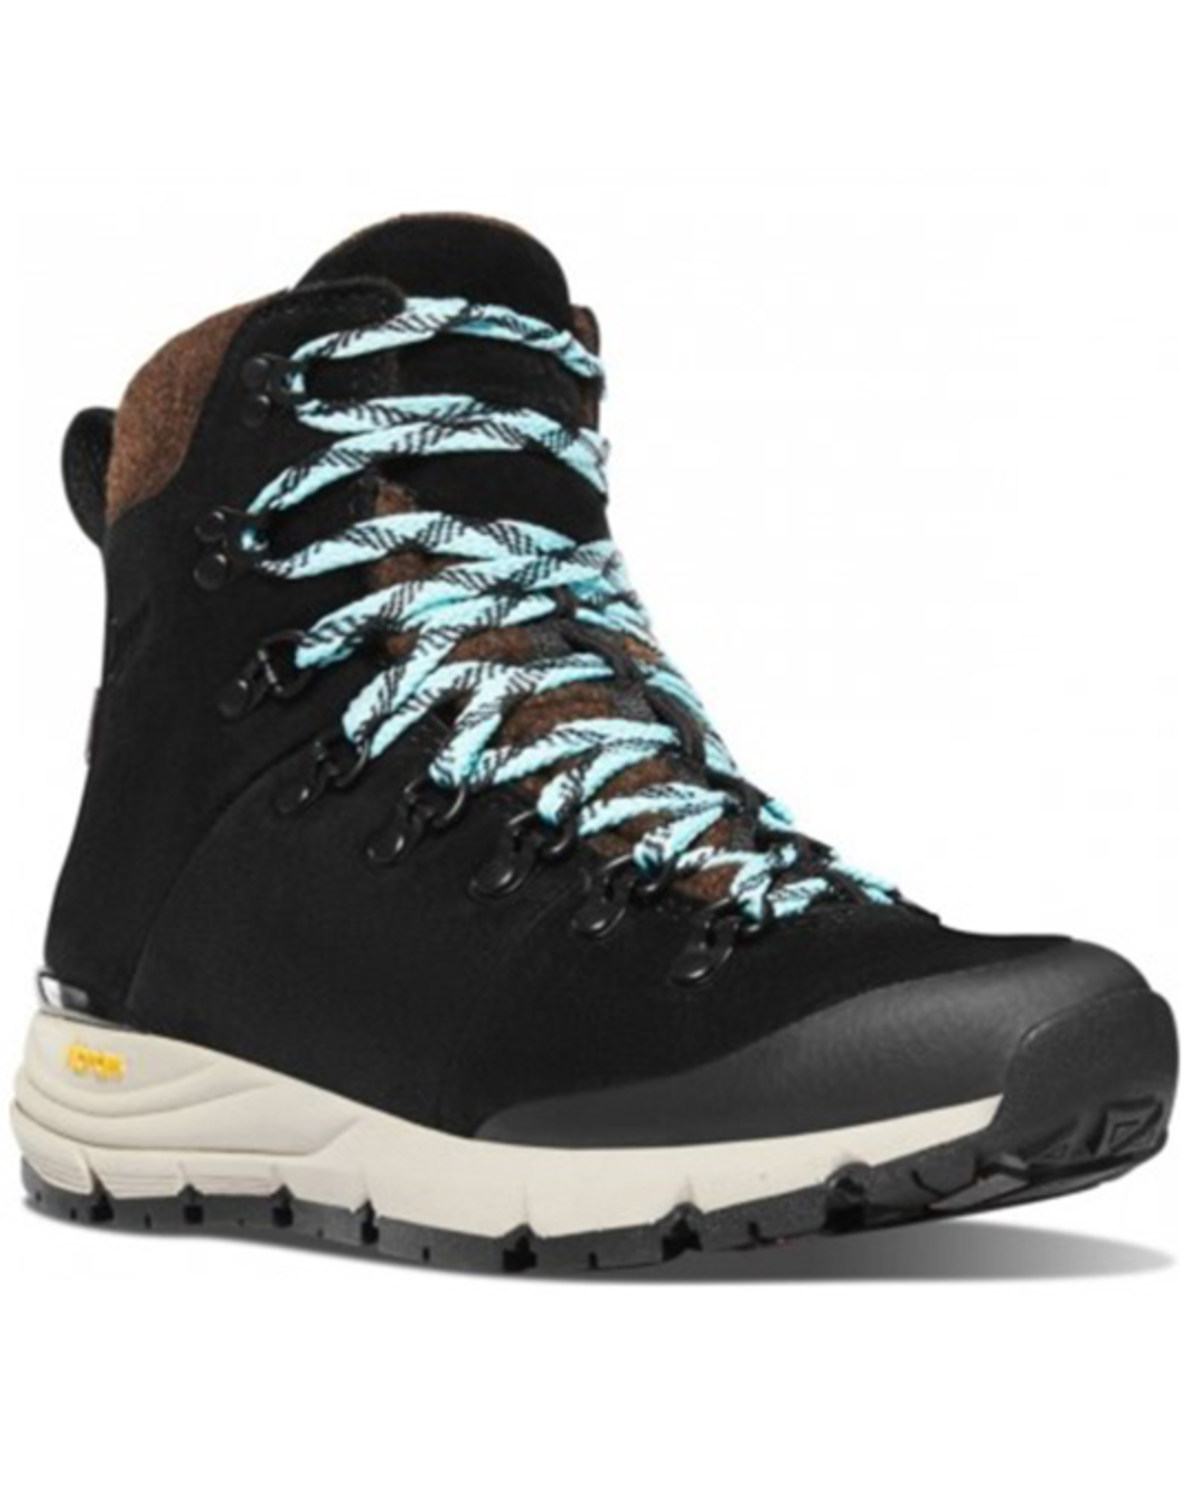 Danner Women's Arctic 600 Side Zip Lace-Up Hiking Boot